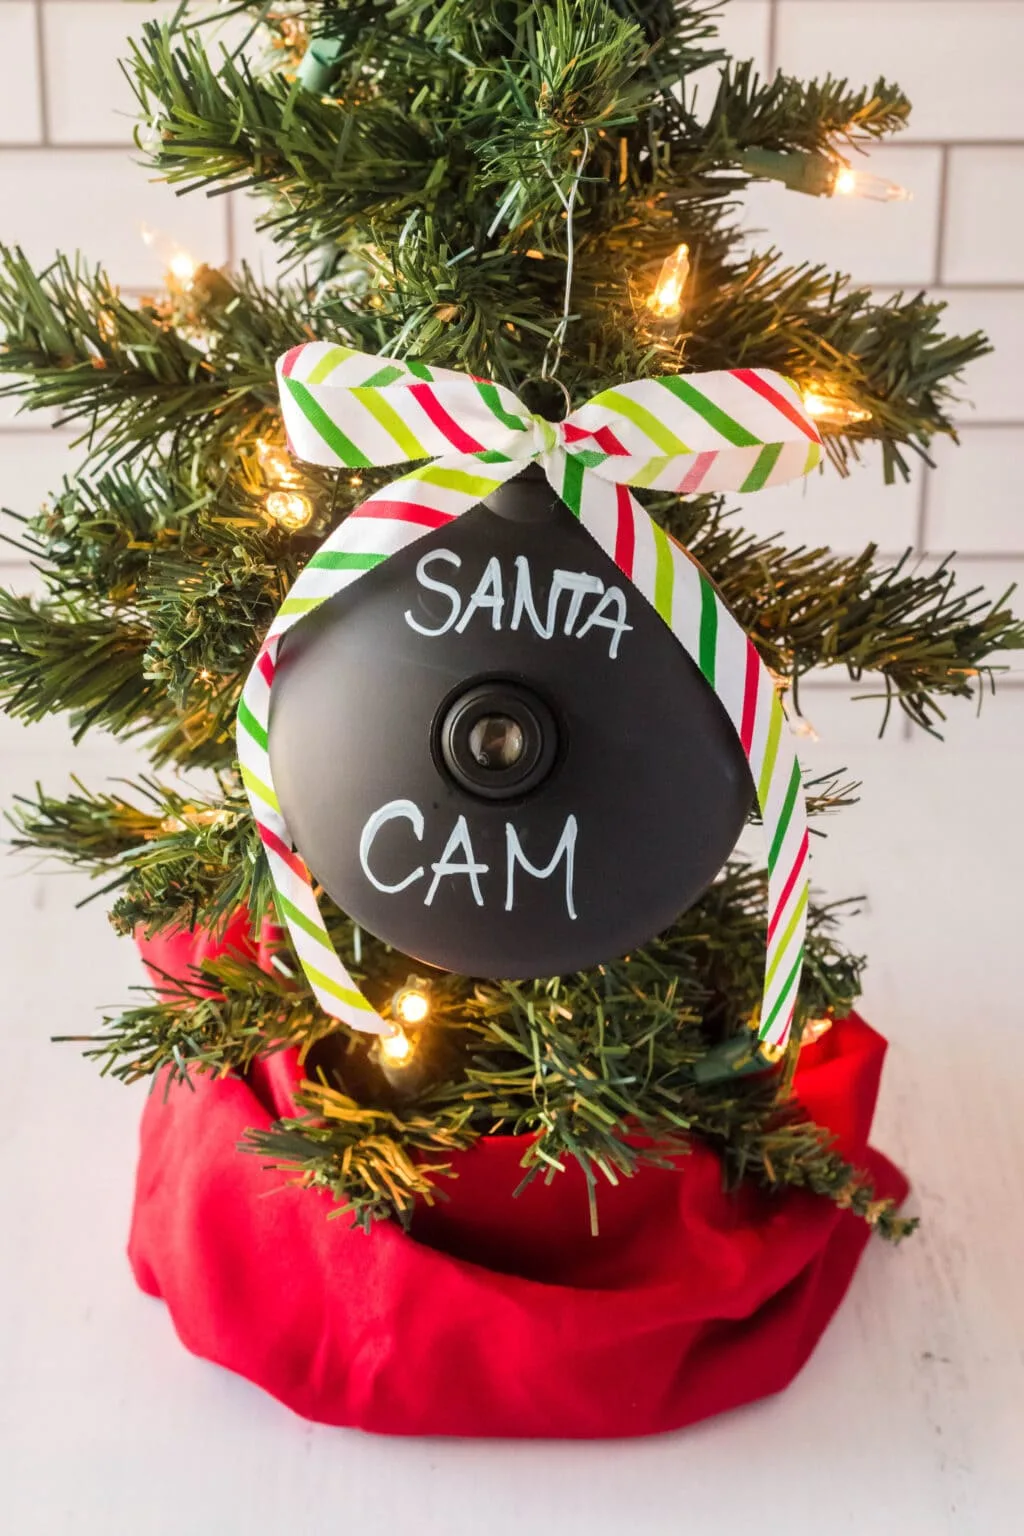 Santa cam ornament hanging on tree